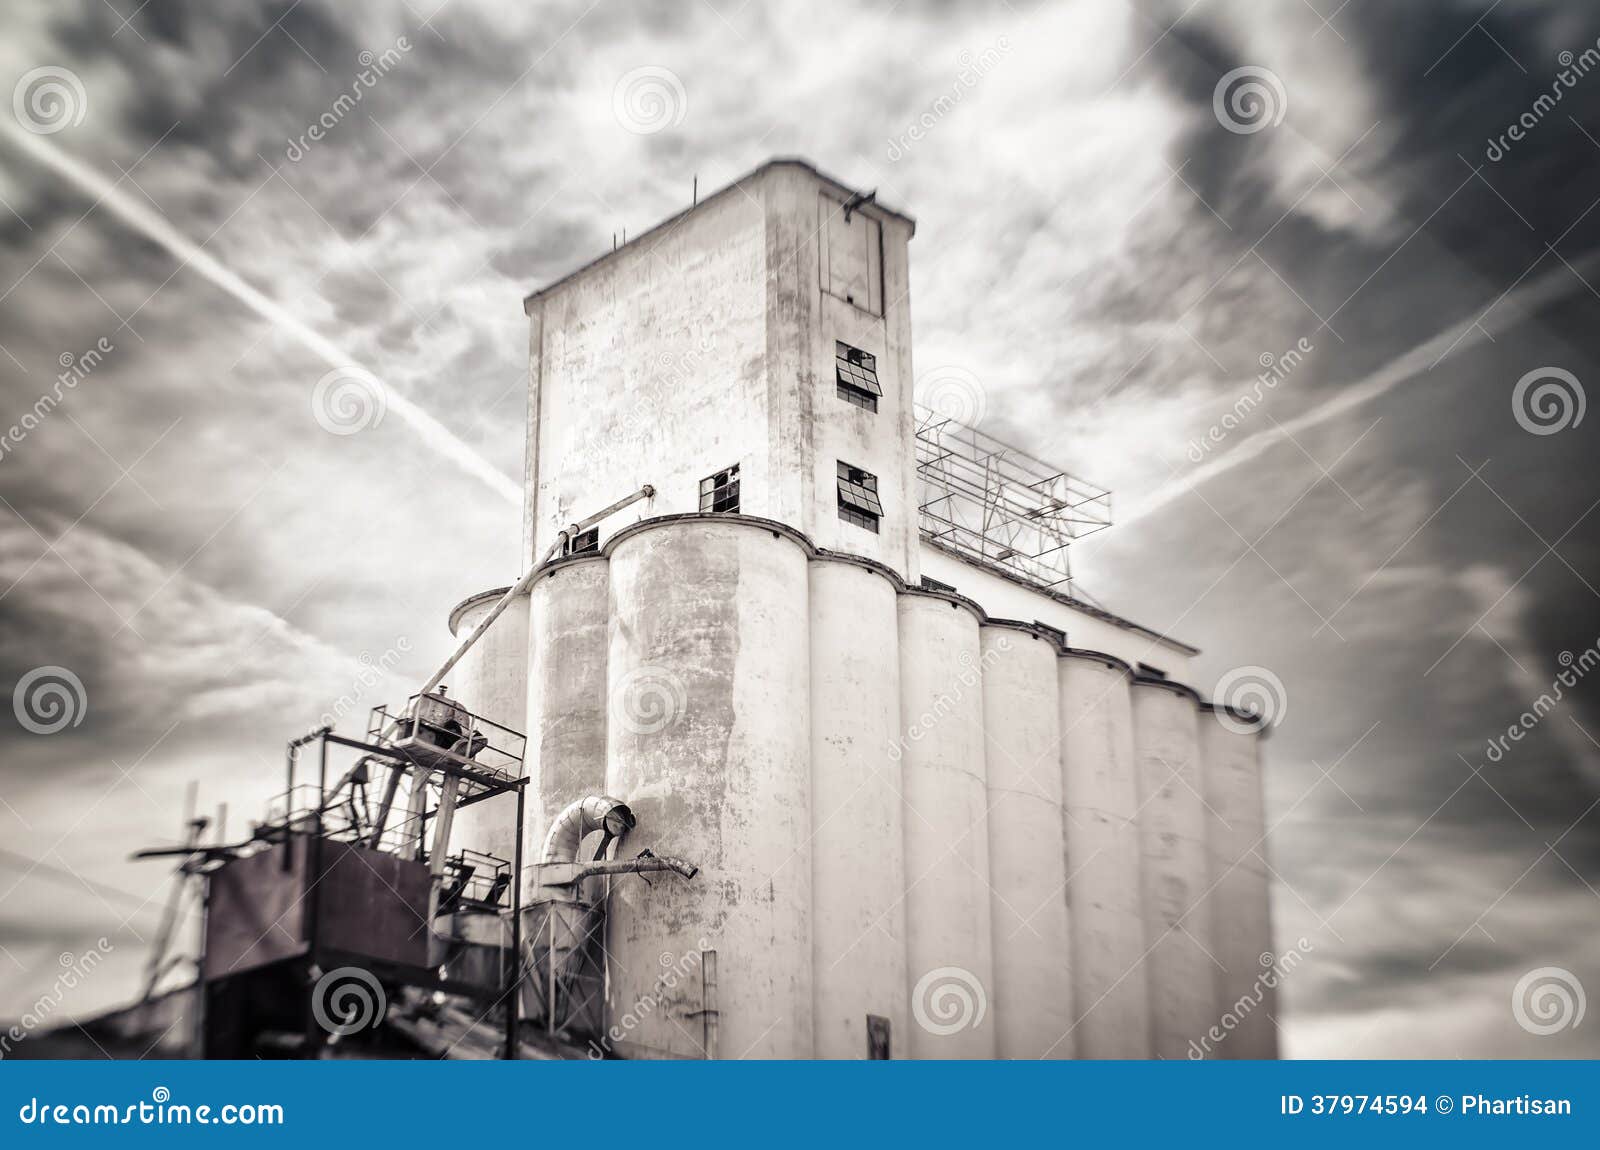 tilt shift photo of old obsolete flour grain silo, mesa, arizona